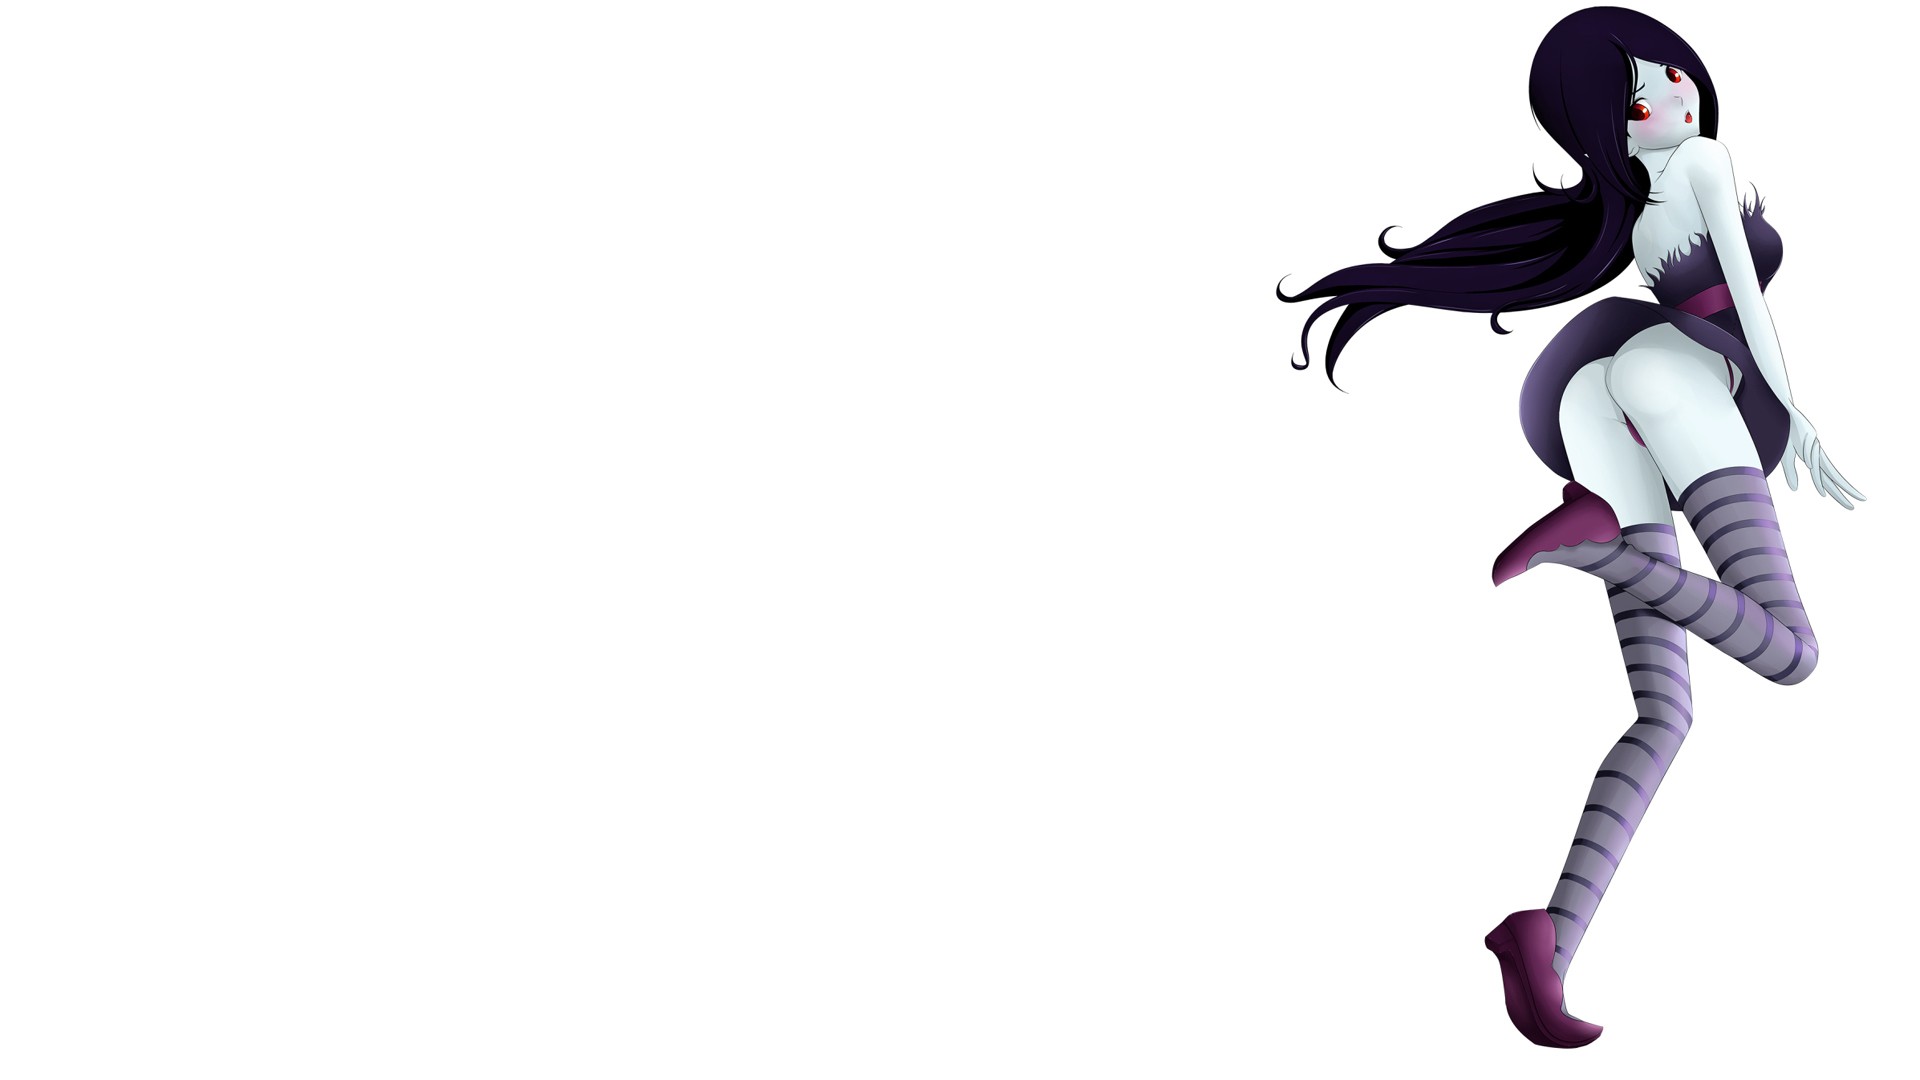 Anime 1920x1080 anime girls simple background ass long hair dark hair white background anime legs red eyes Adventure Time Marceline the vampire queen stockings purple stockings striped stockings